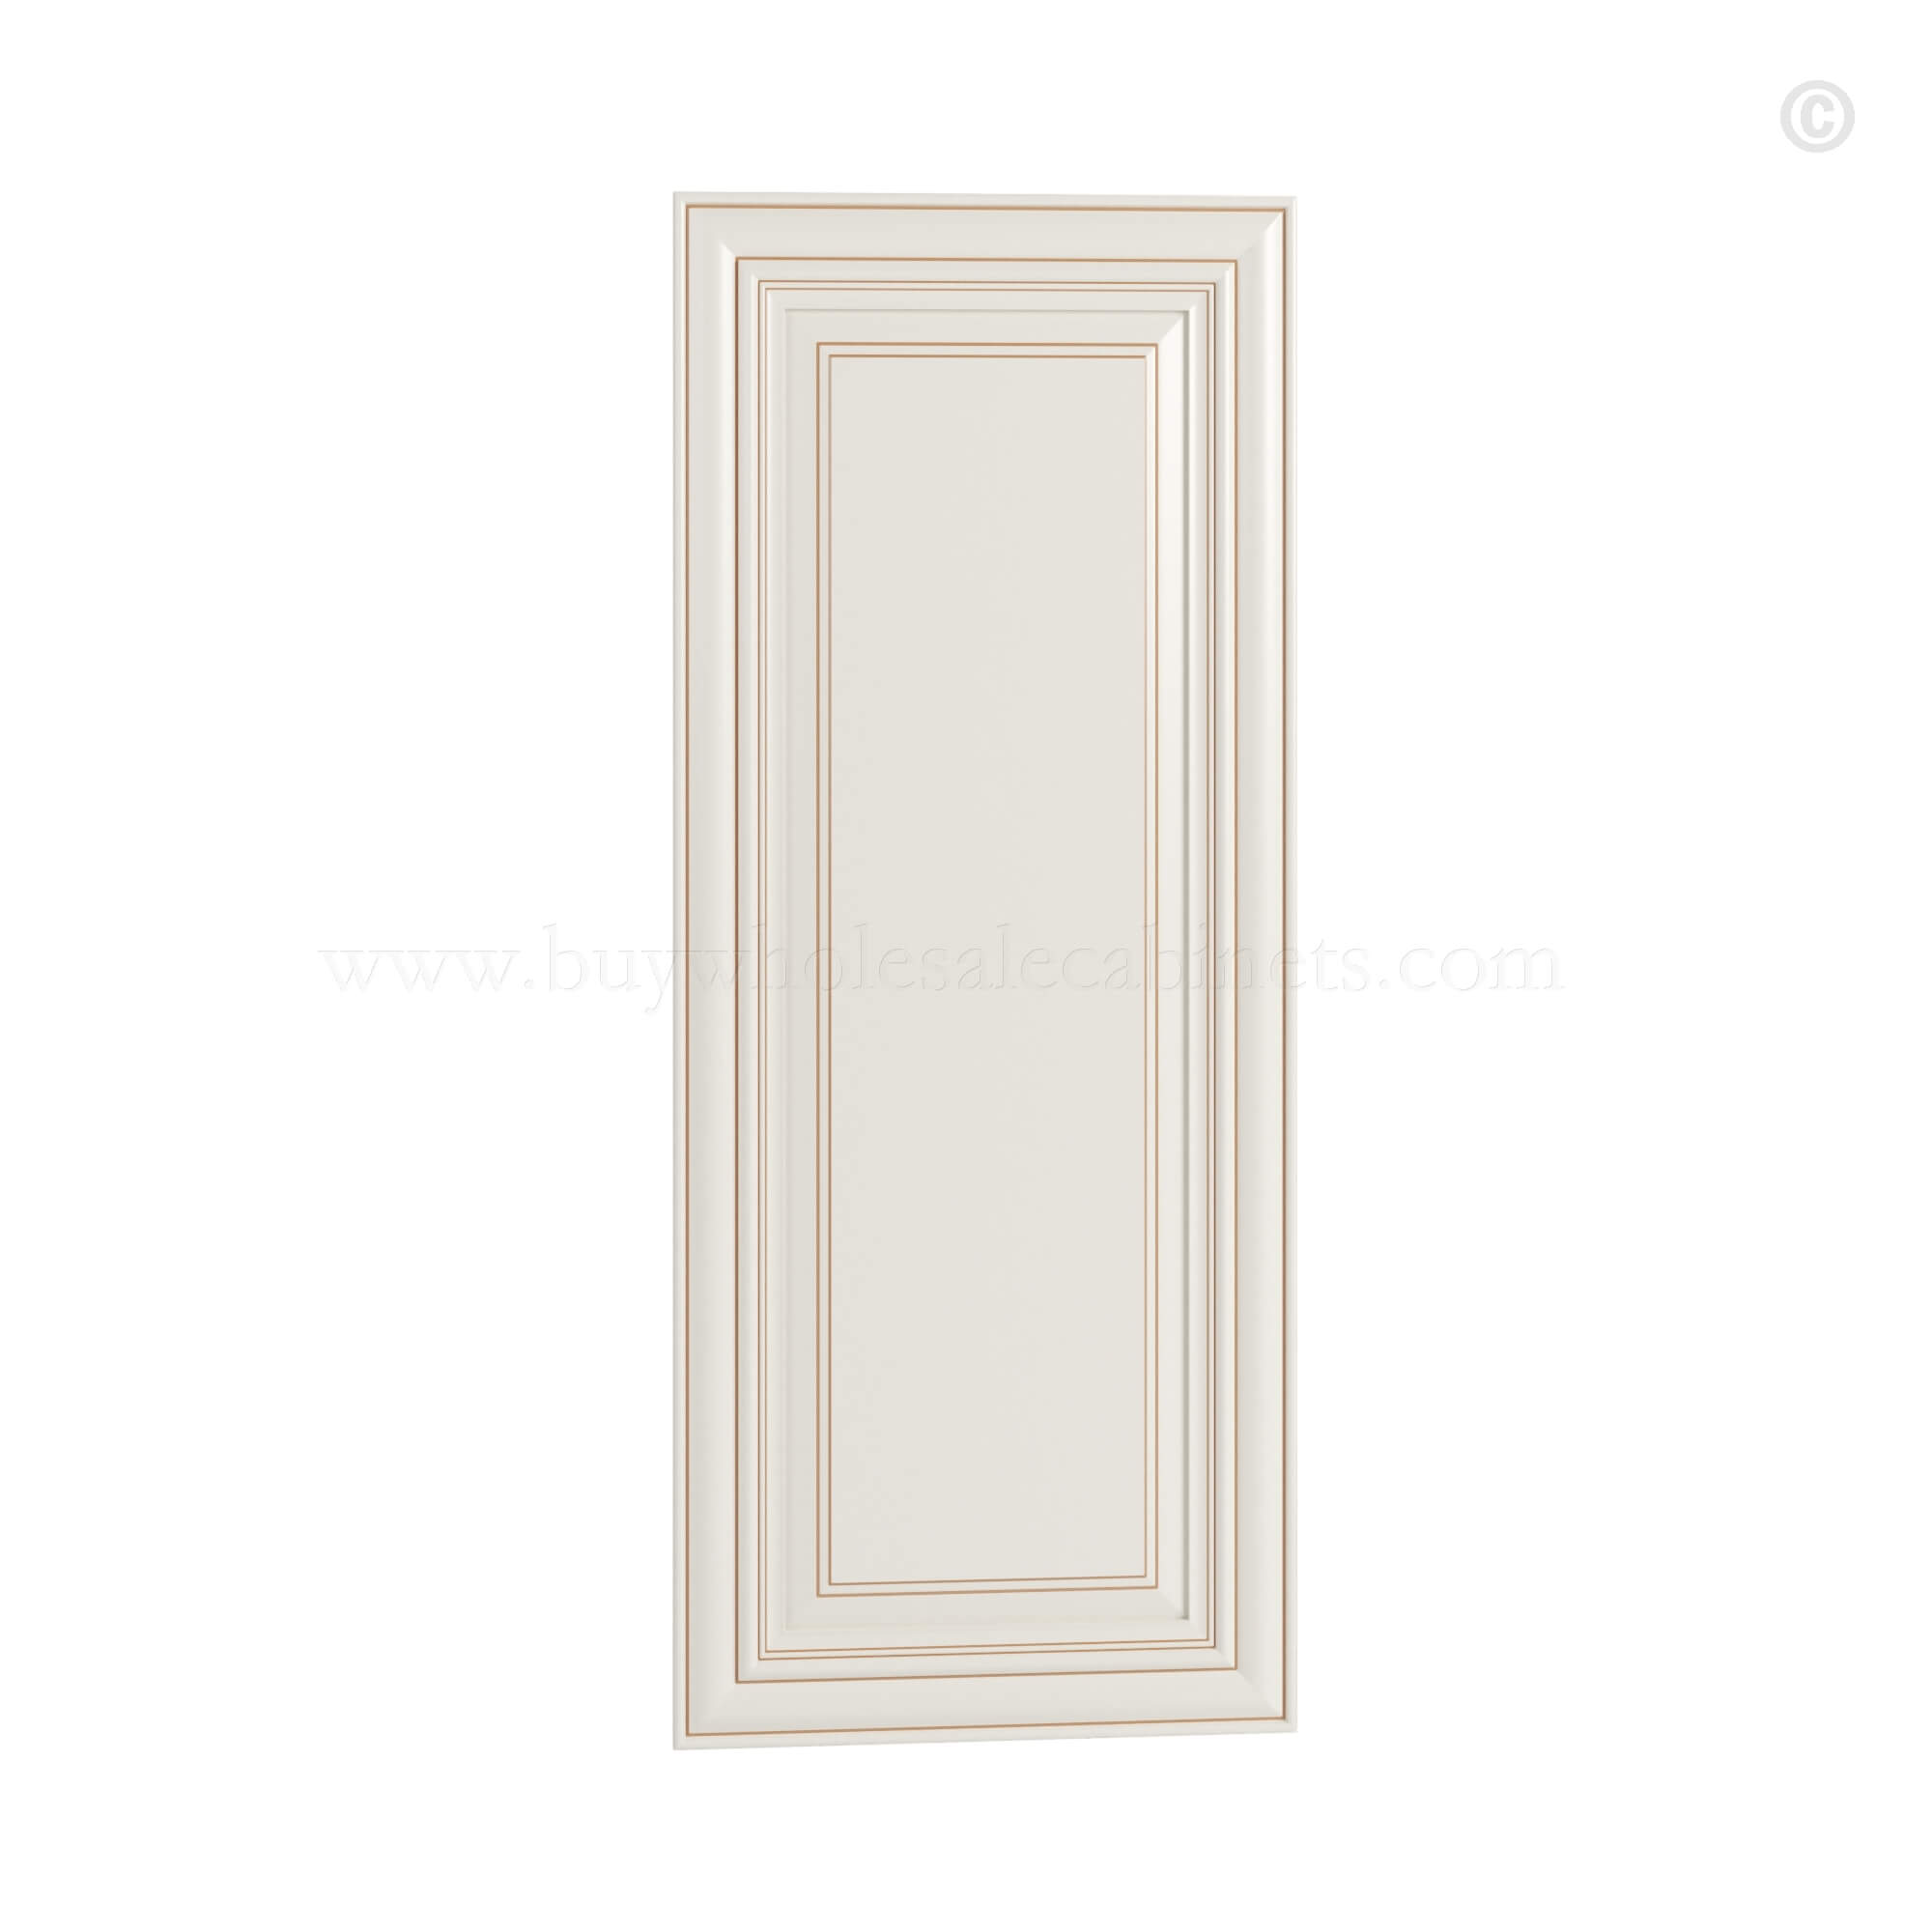 Charleston White Raised Panel Wall Decorative Door Panel